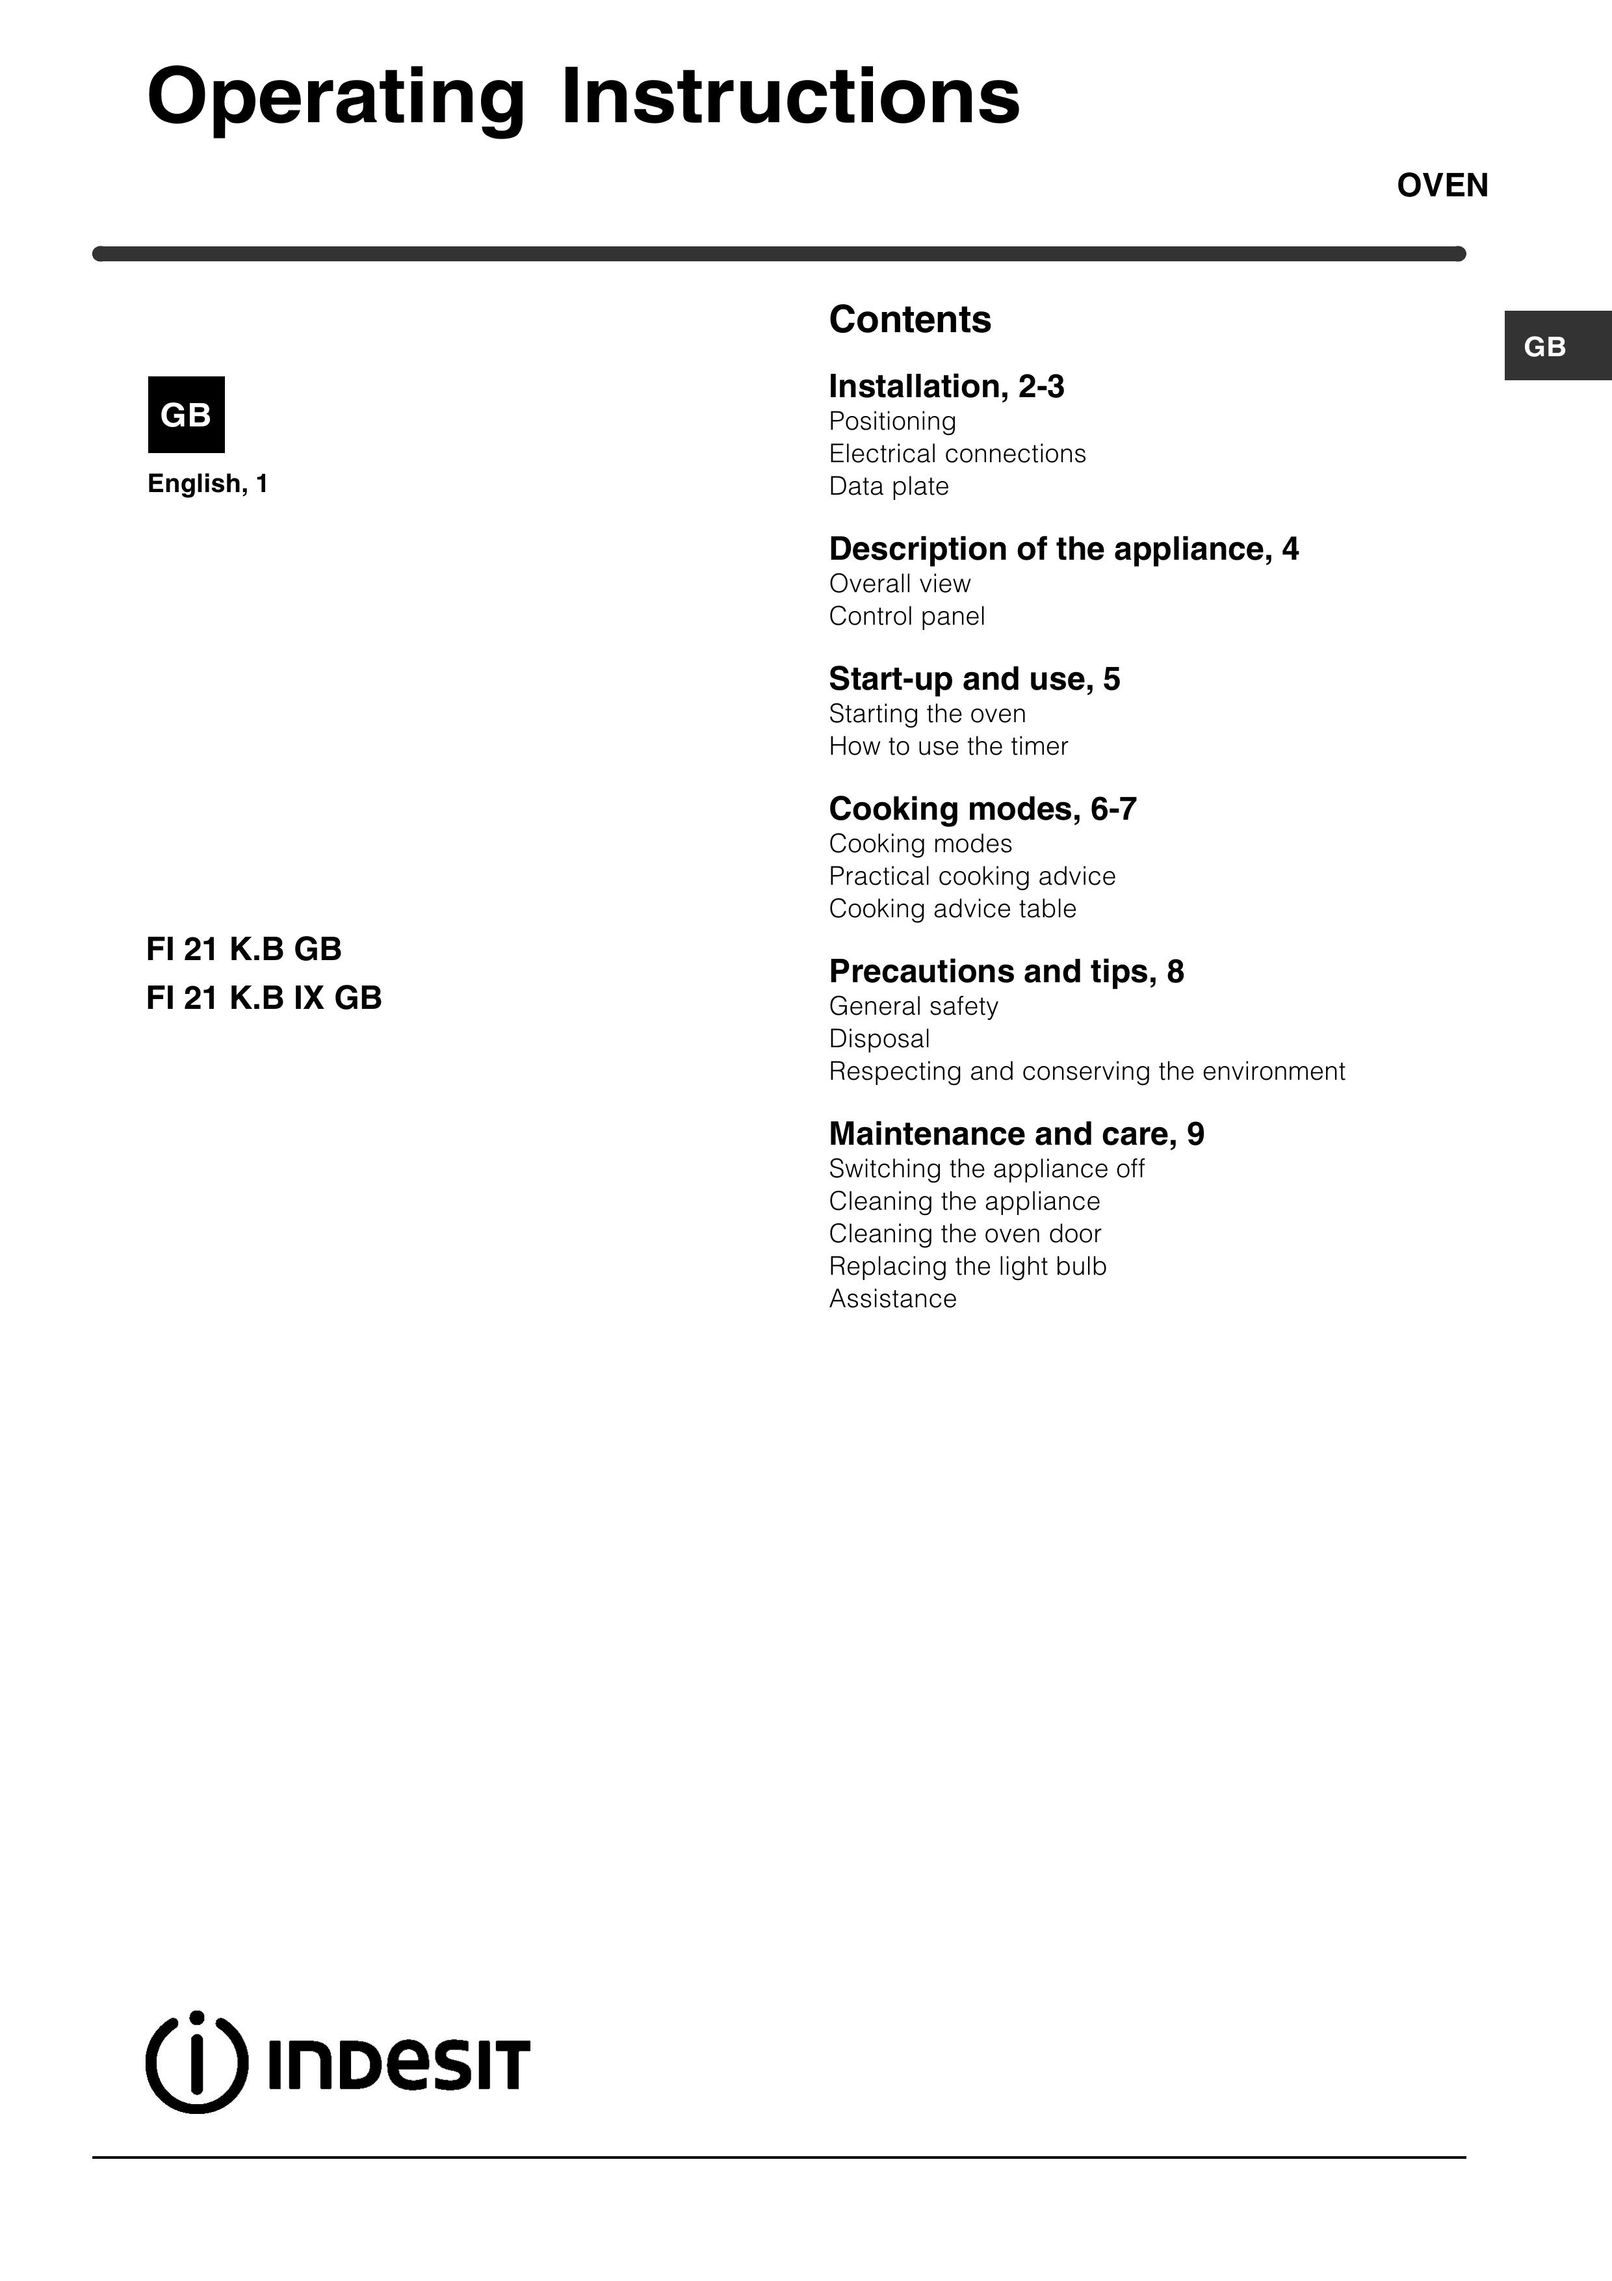 Indesit FI 21 K.B IX GB Oven User Manual